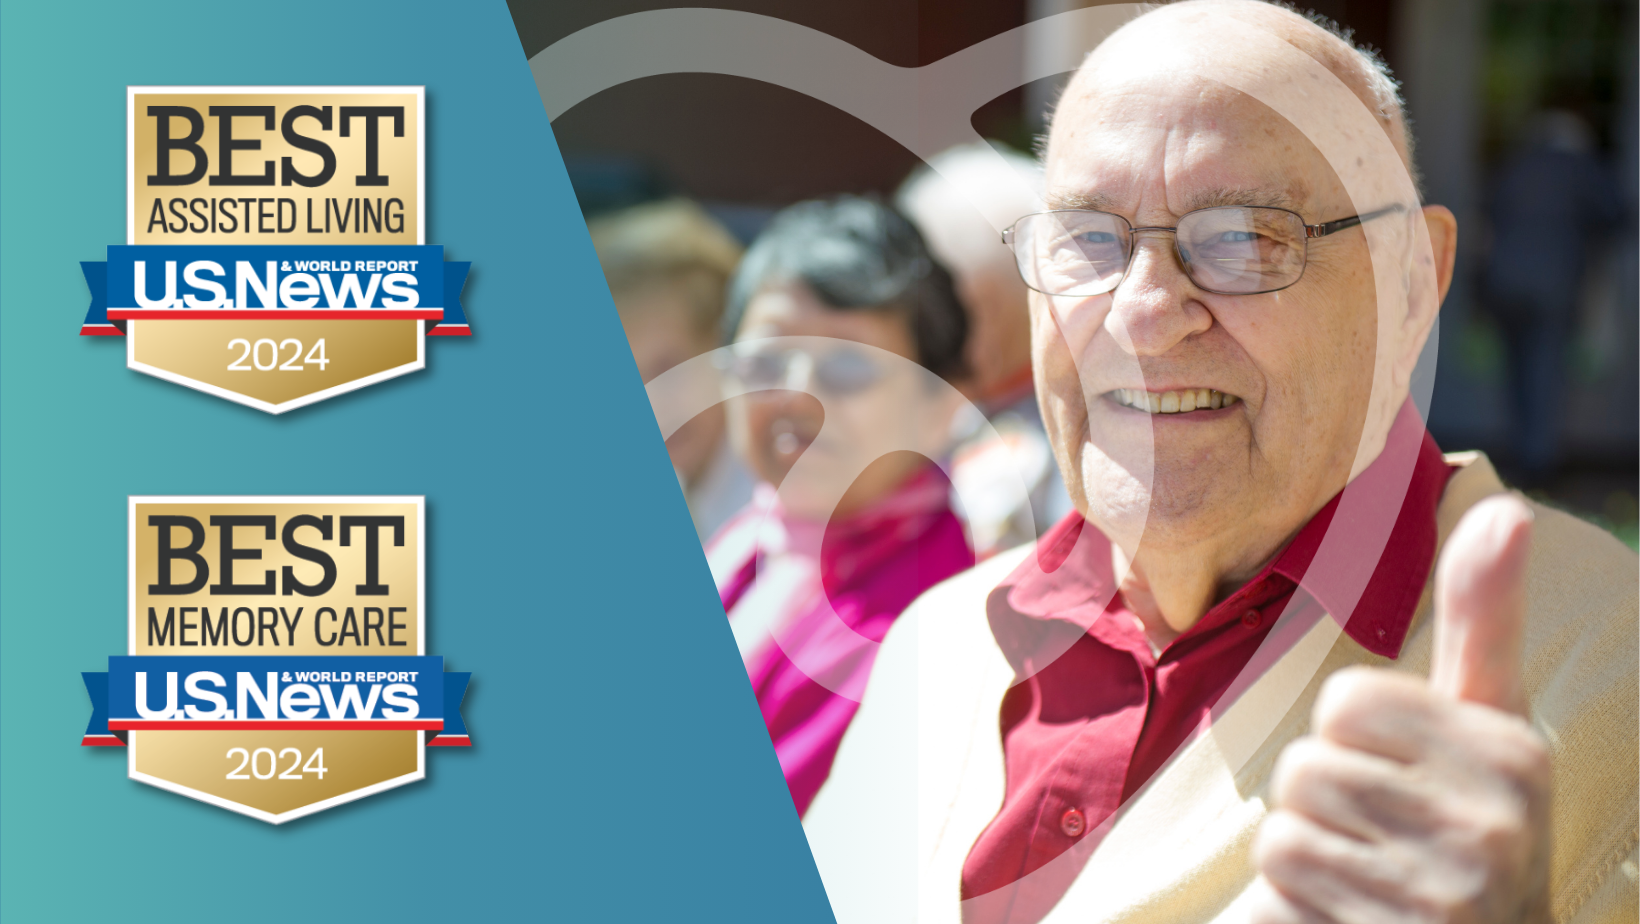 Elder Care Alliance Communities Among Best Again by U.S. News & World Report 